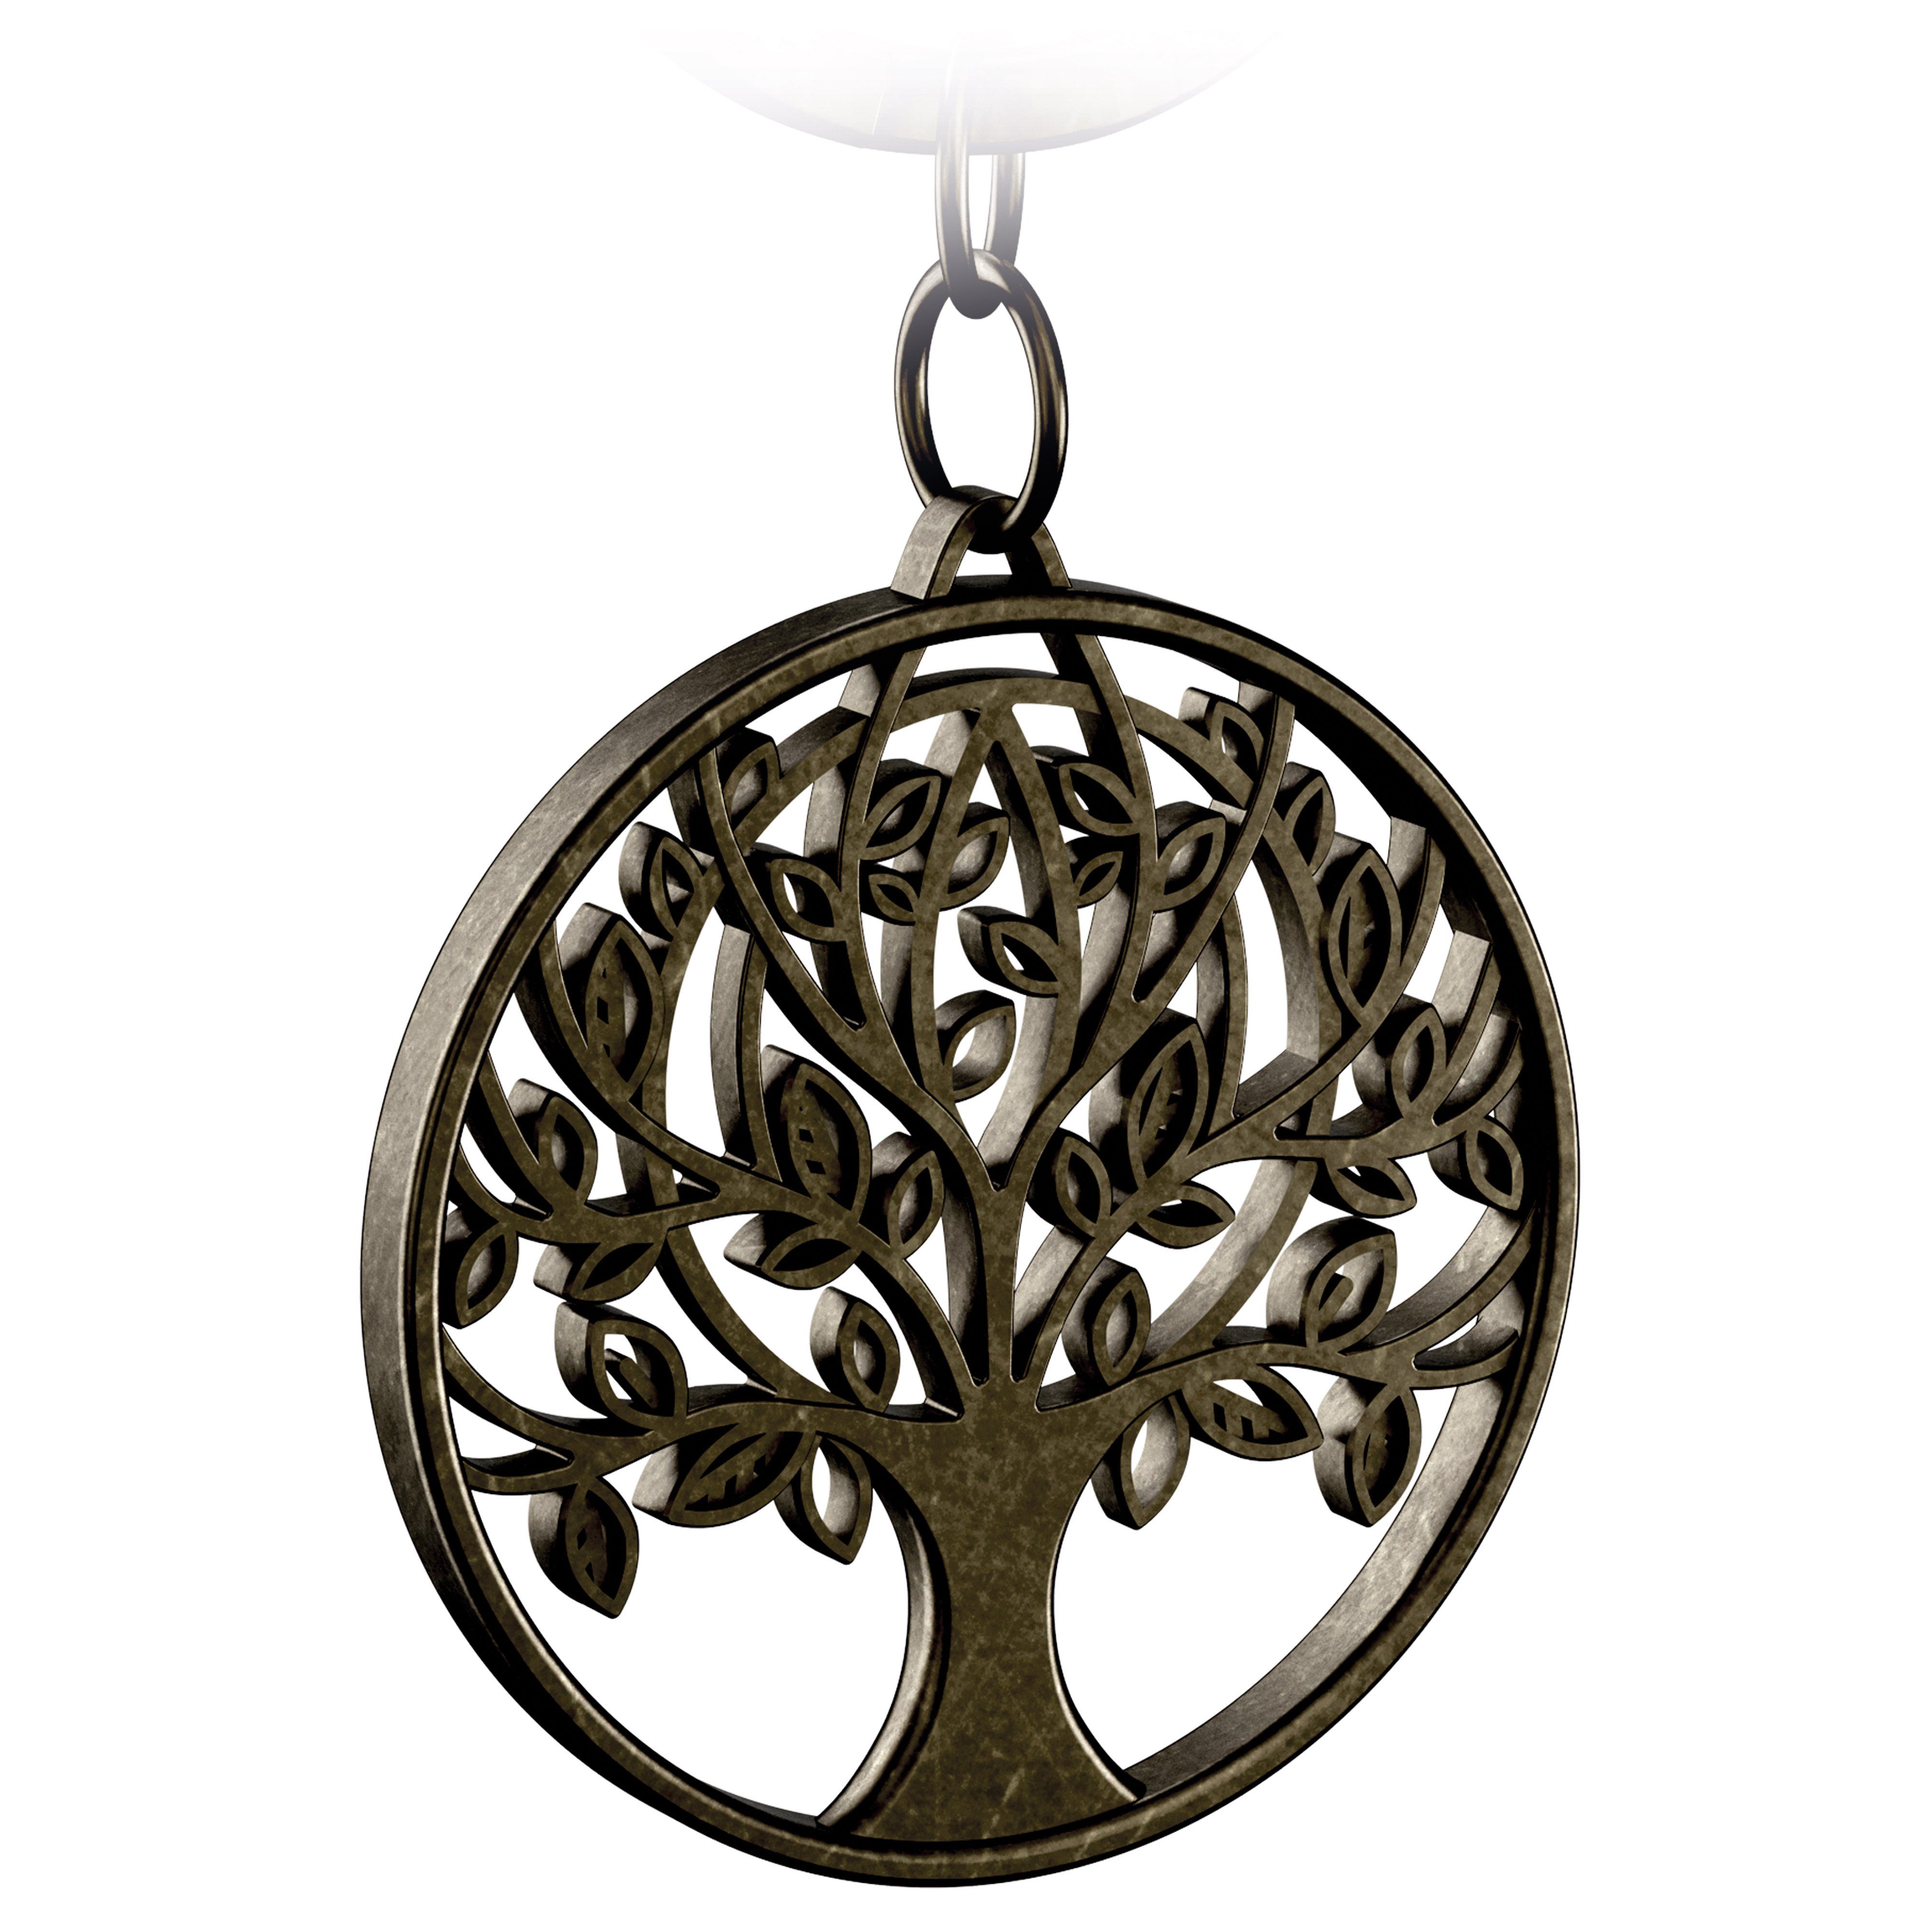 FABACH Schlüsselanhänger Lebensbaum "Autumn" - Baum des Lebens Anhänger als Glücksbringer Antique Bronze | Schlüsselanhänger